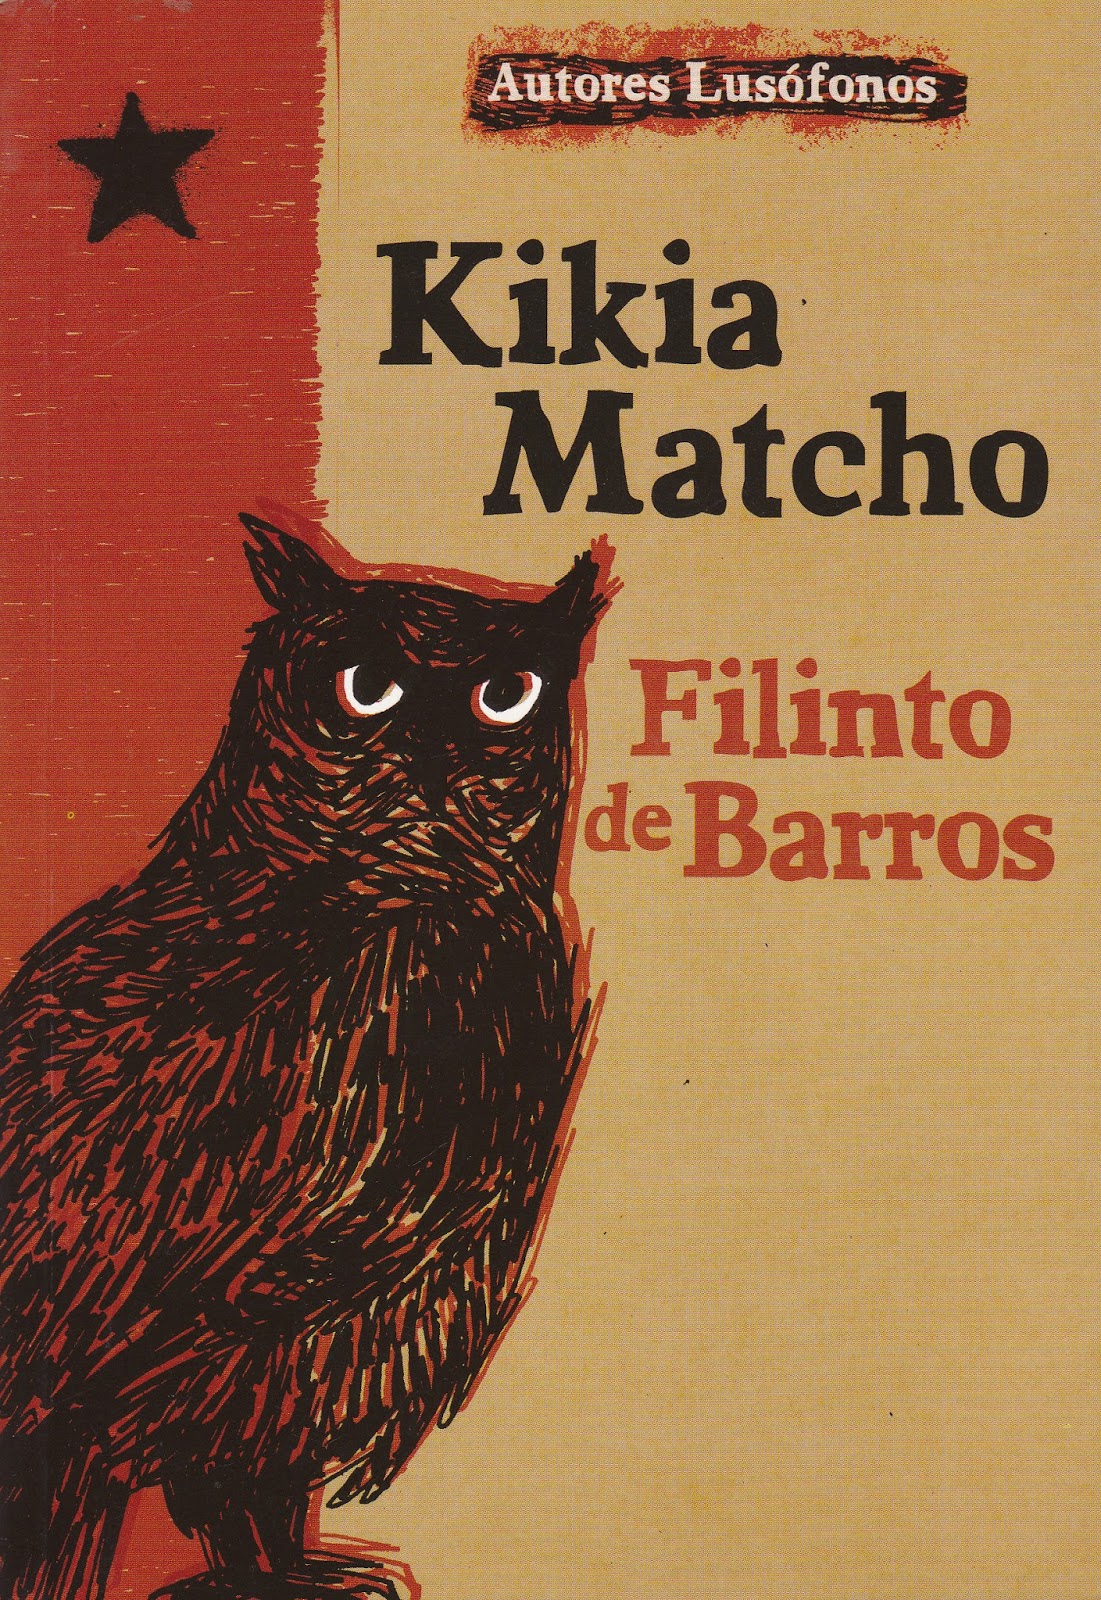 Kikia Matcho de Filinto de Barros